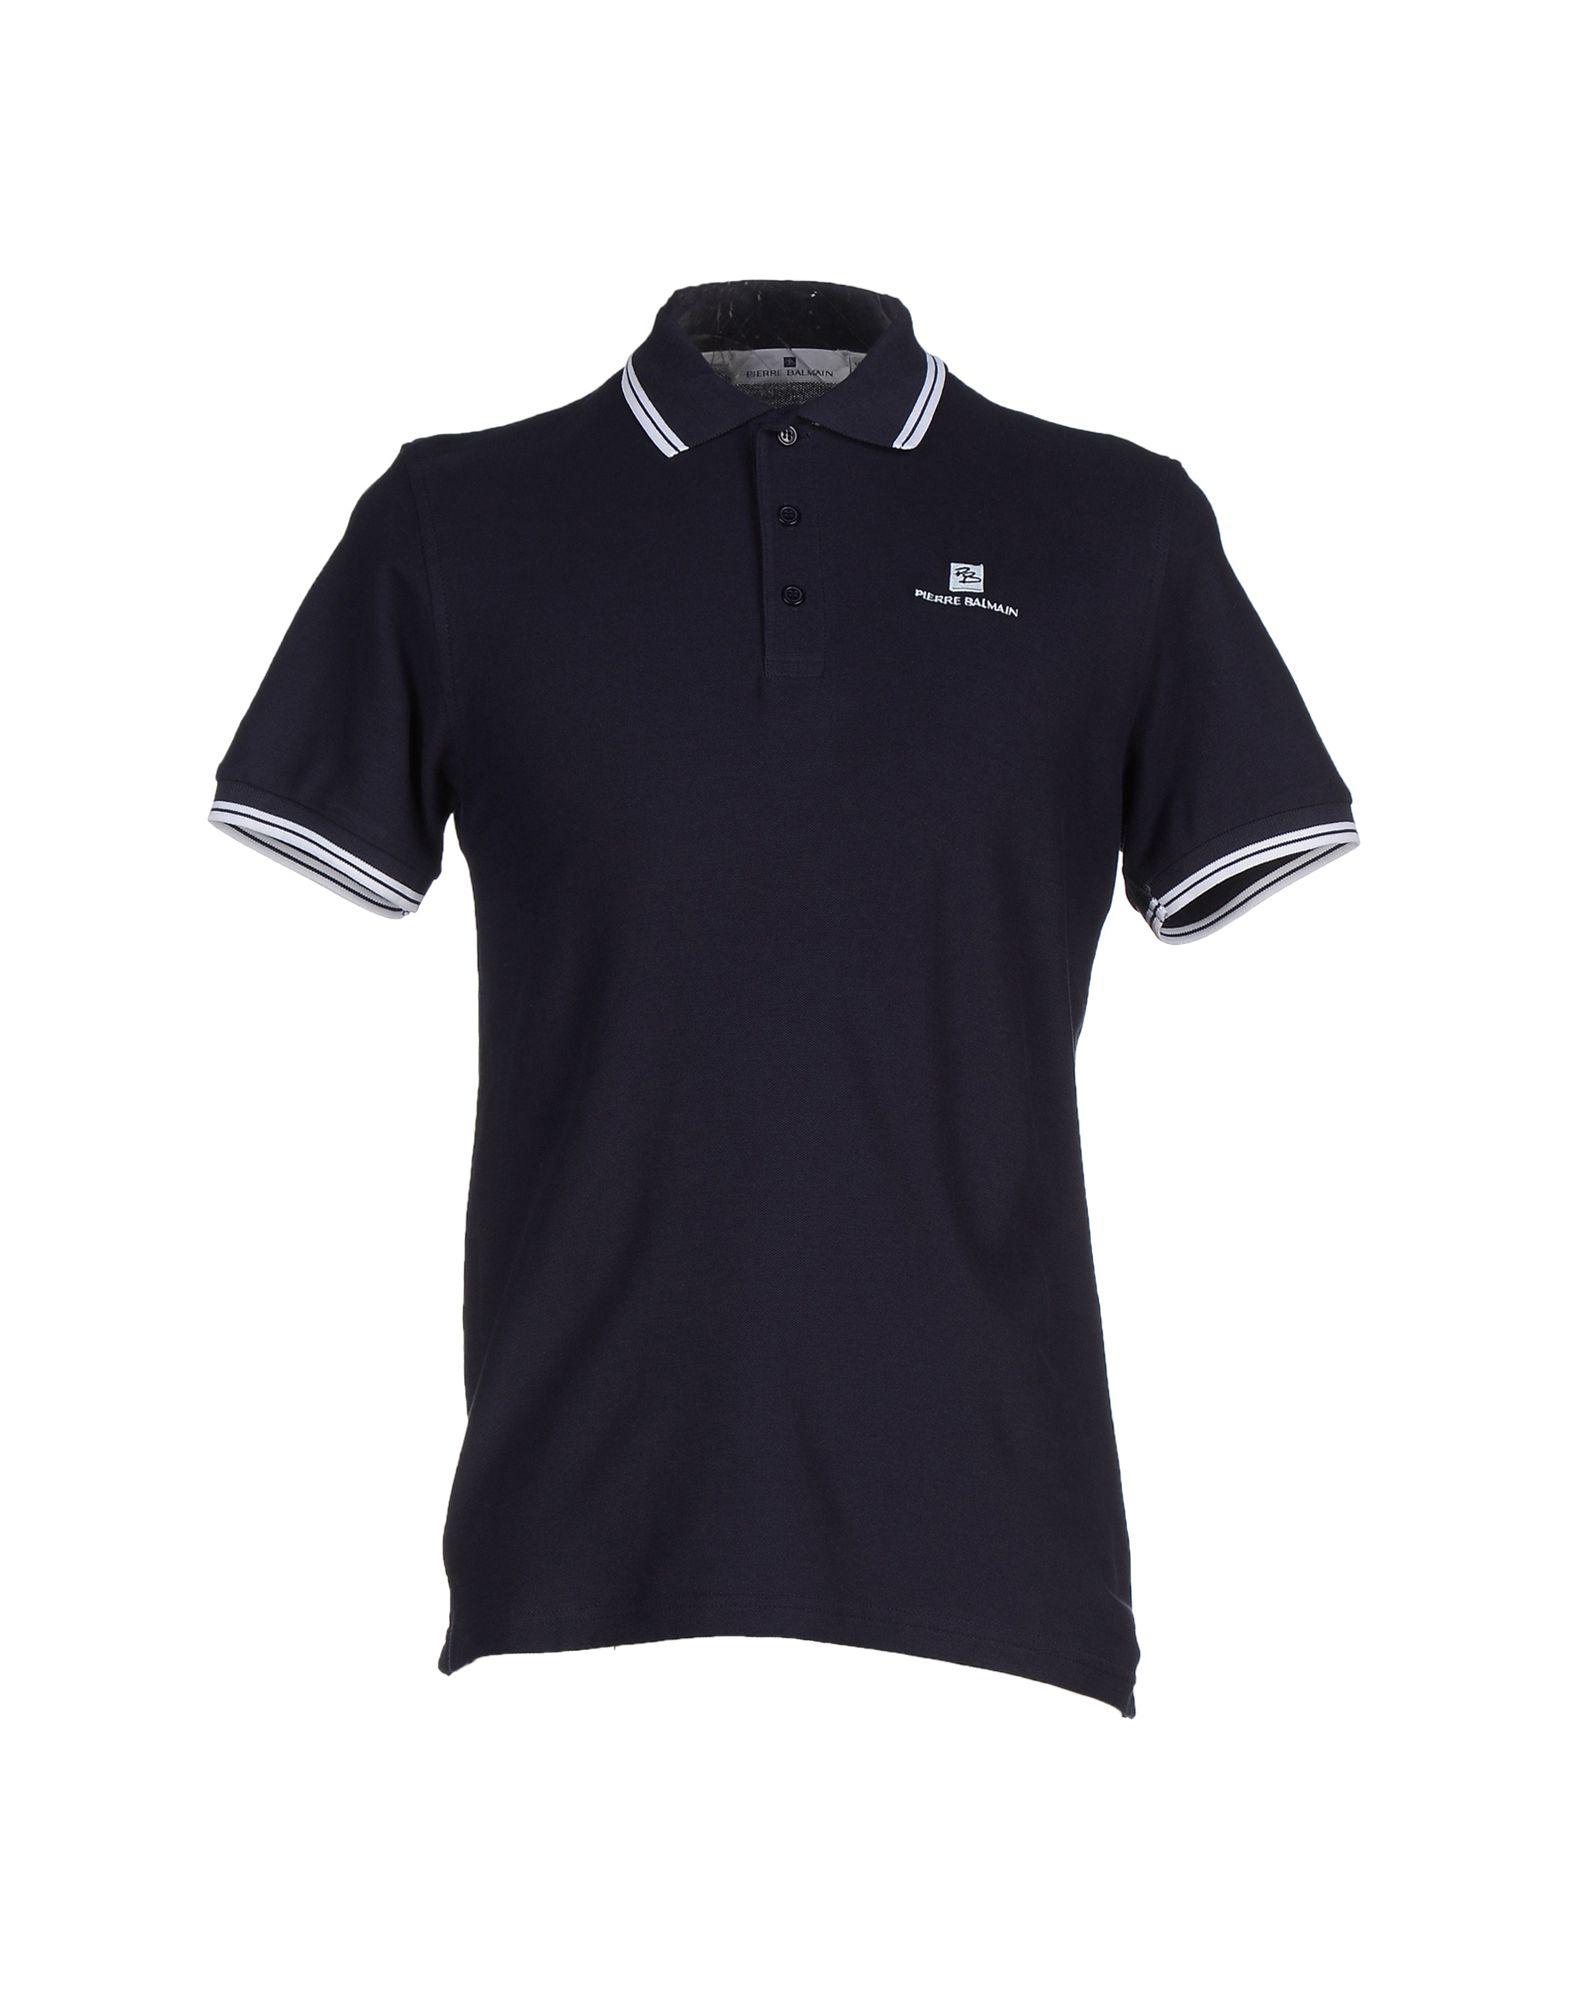 Balmain Cotton Polo Shirt in Dark Blue (Blue) for Men - Lyst